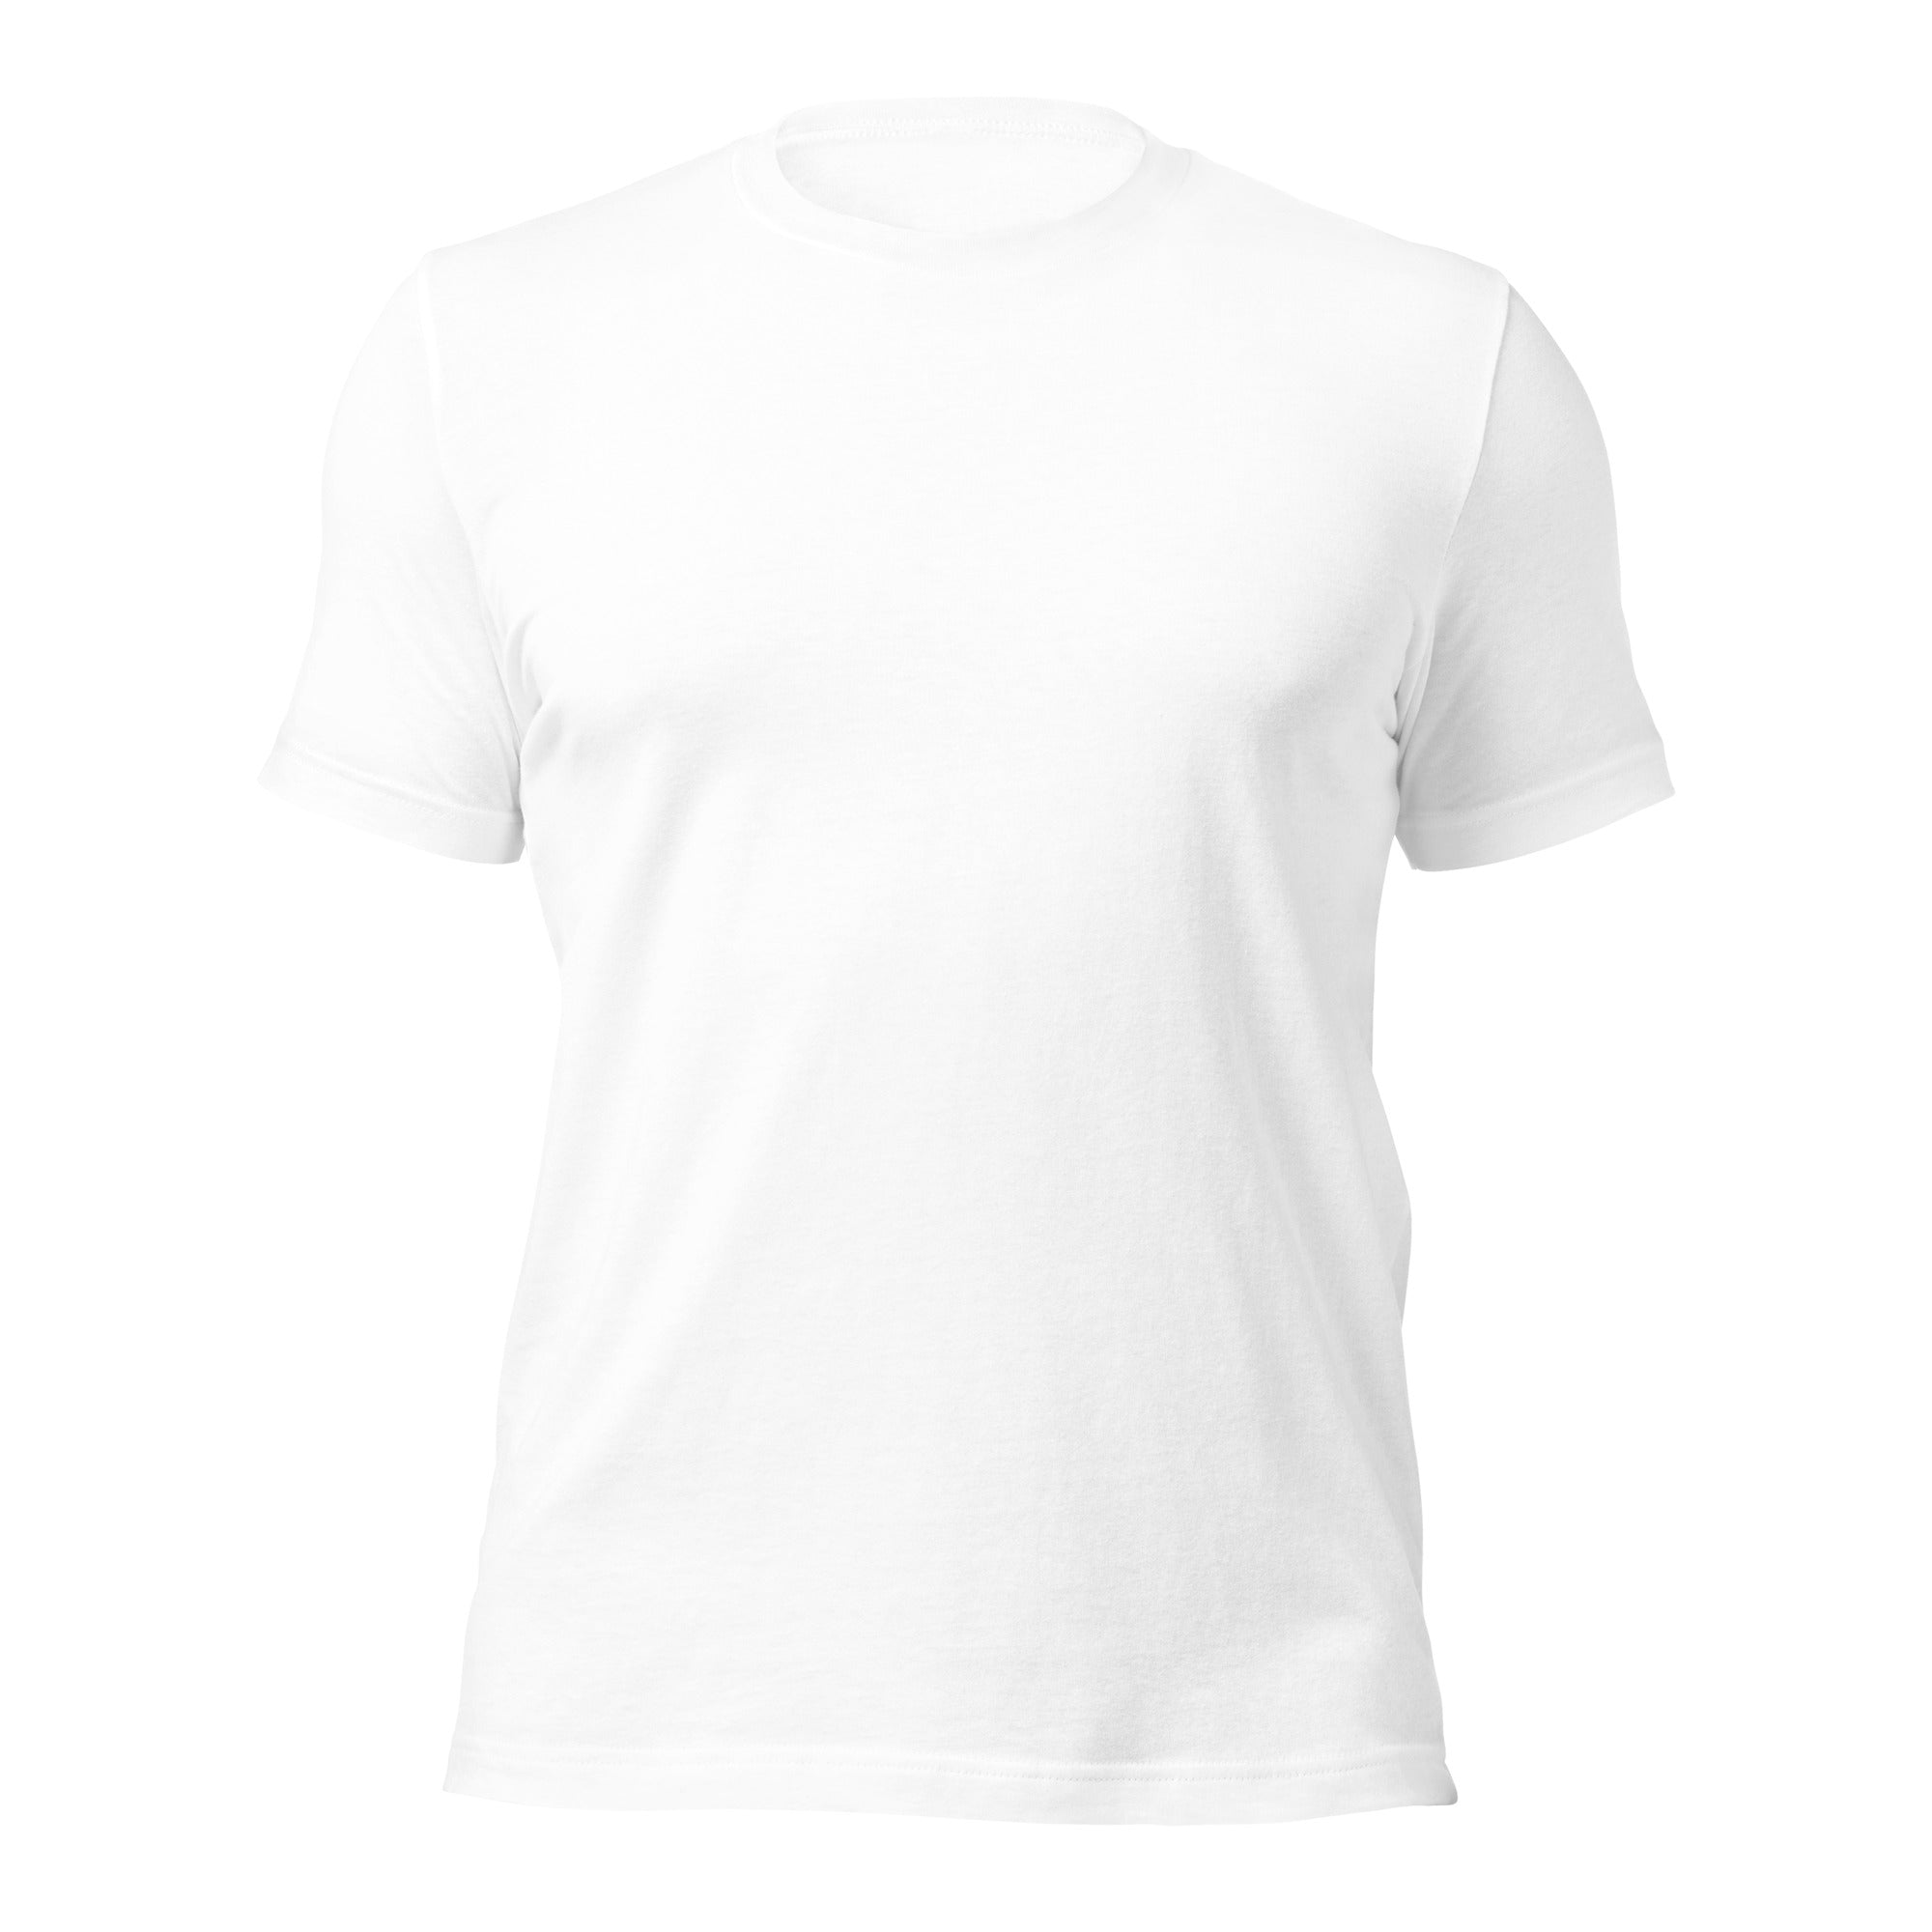 Scottish Deerhound - Short Sleeve Cotton Tee  Shirt